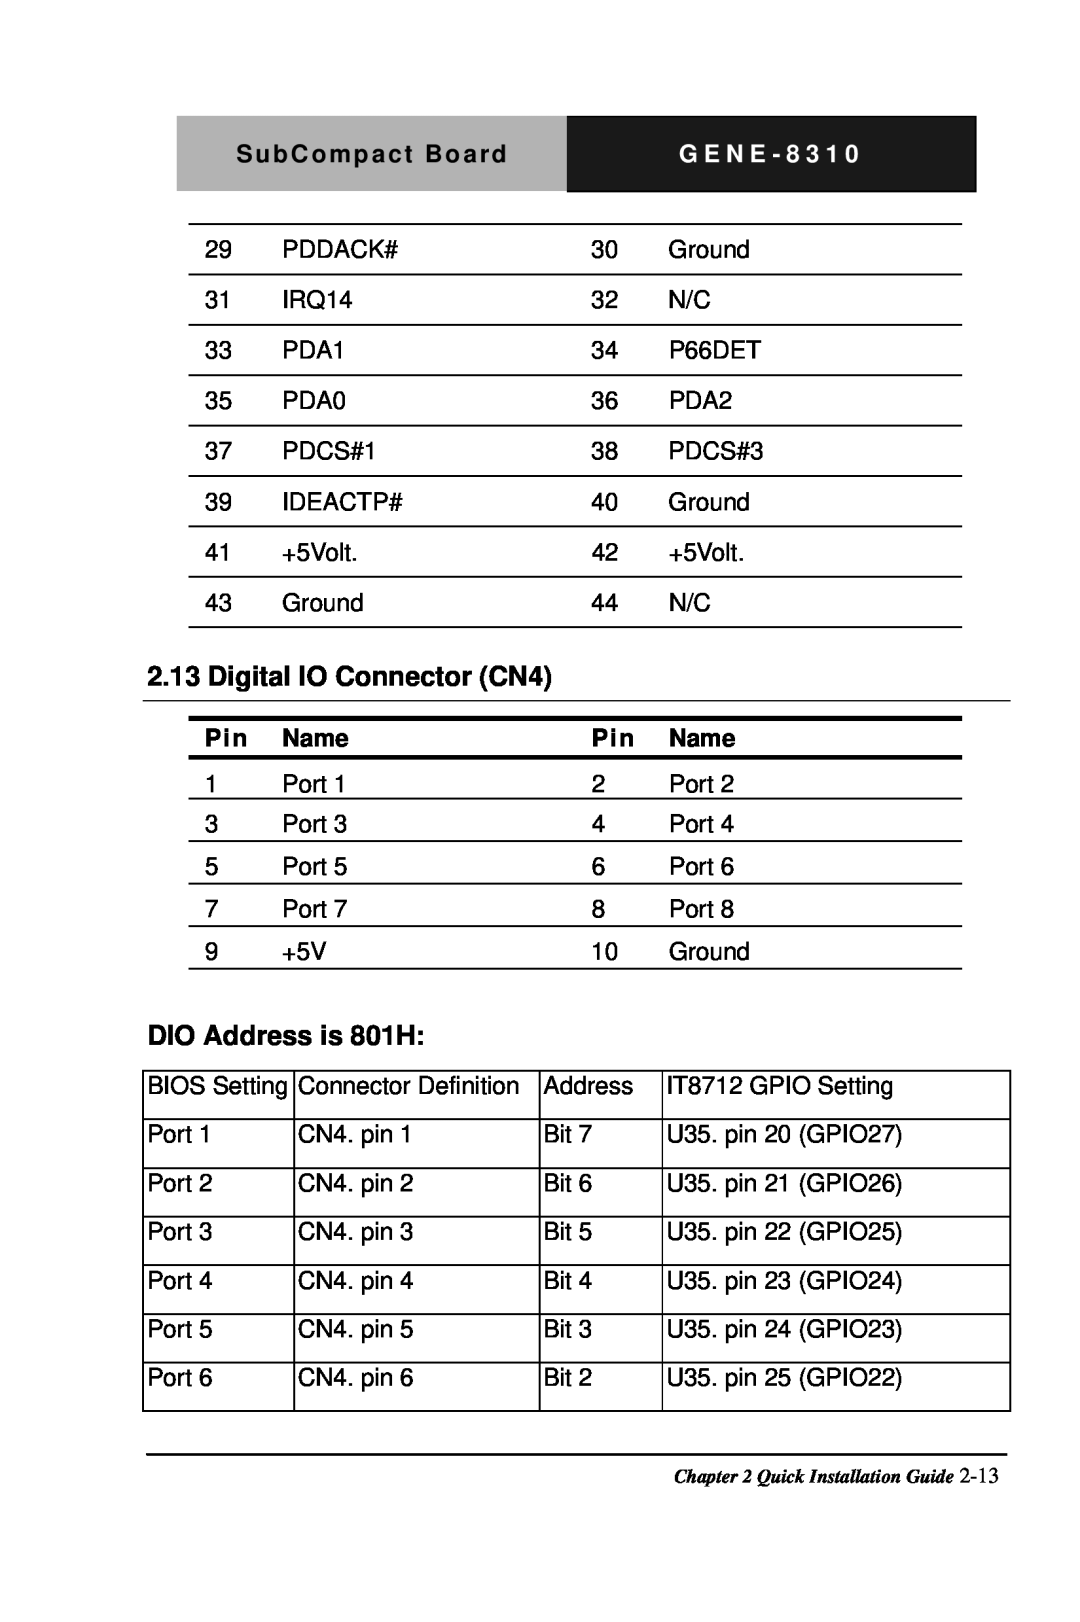 Intel GENE-8310 manual Digital IO Connector CN4, DIO Address is 801H, SubCompact Board, G E N E - 8 3 1, Name 